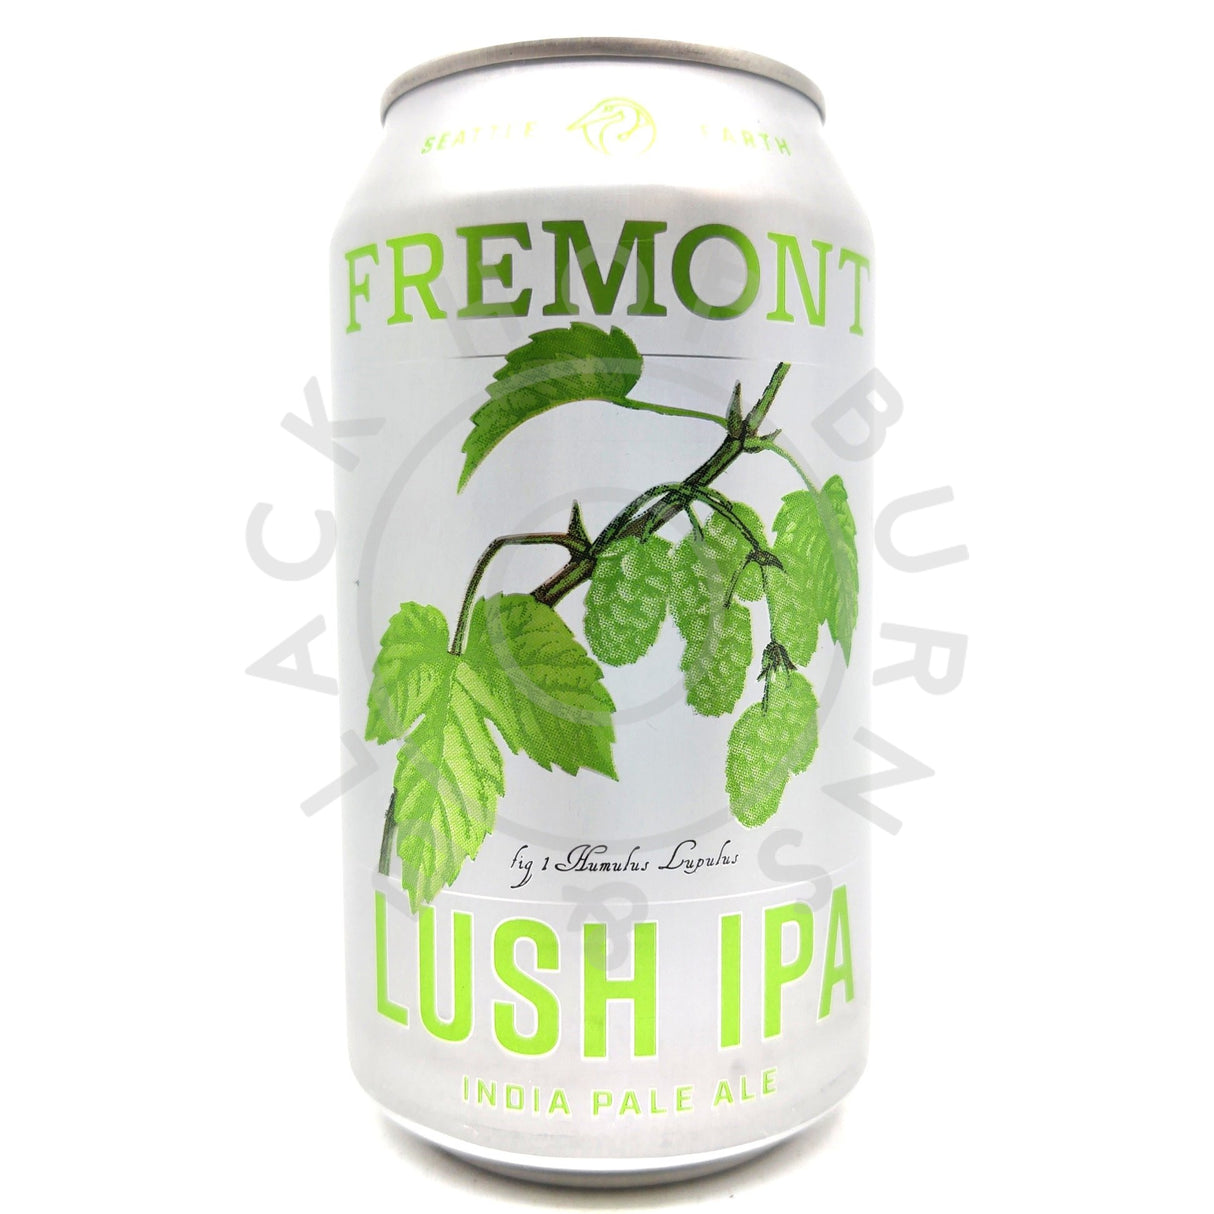 Fremont Lush IPA 7% (355ml can)-Hop Burns & Black